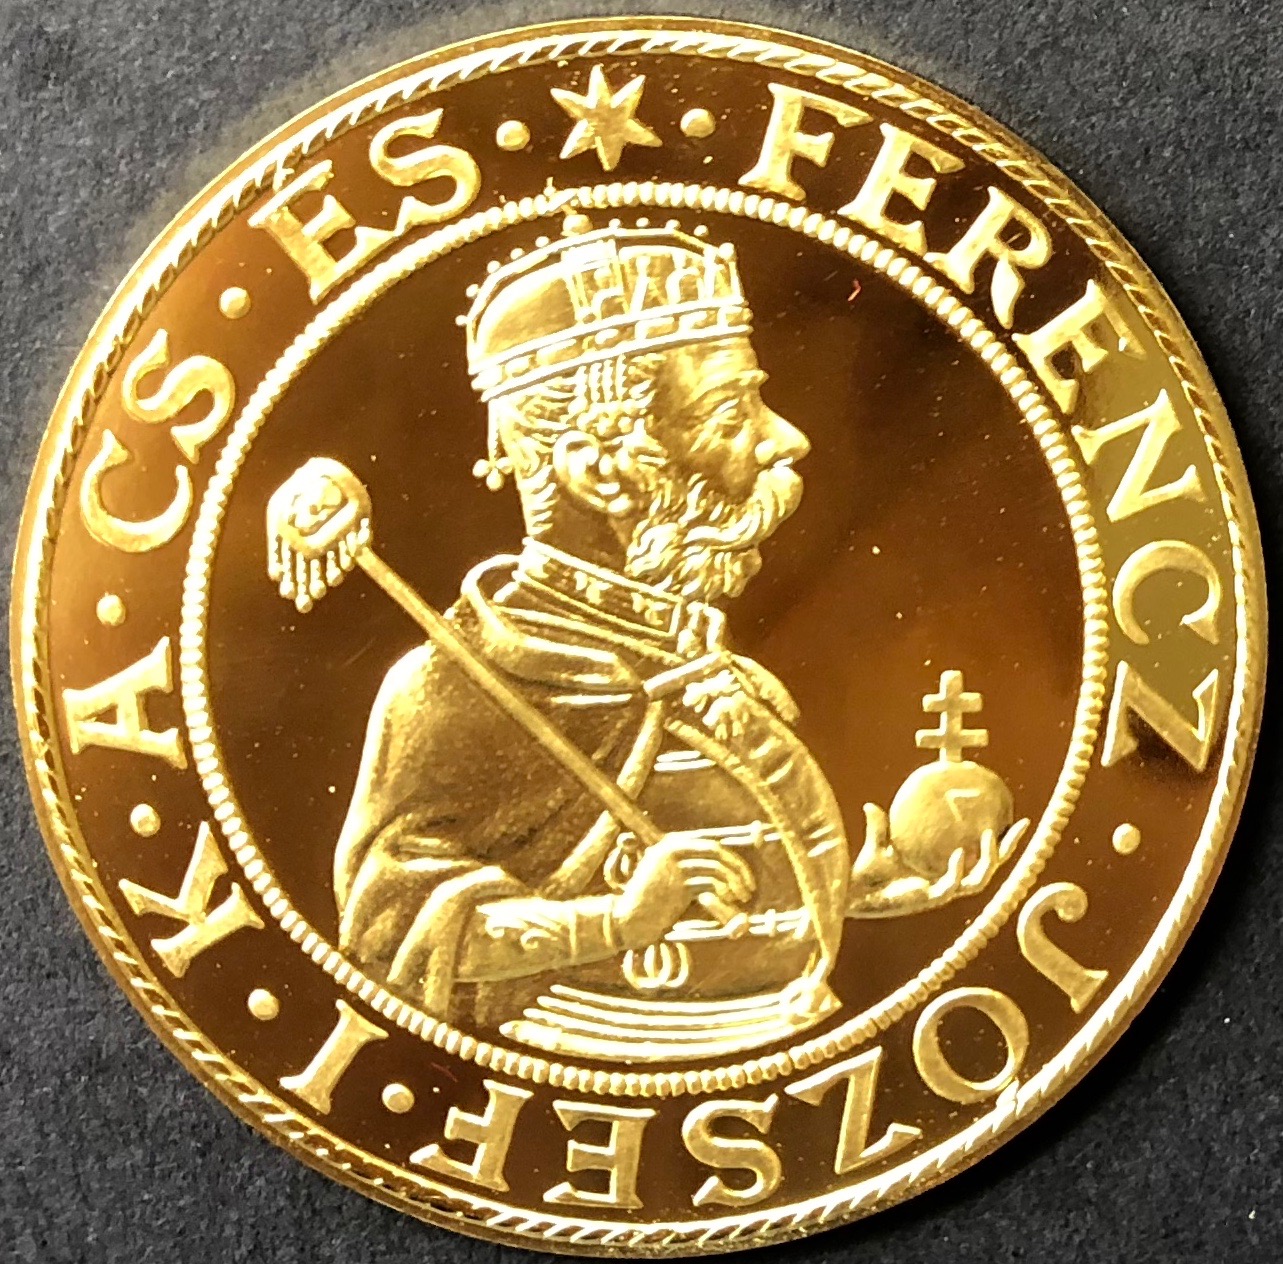 PREMIUM GOLD COIN - 大型で希少で状態の良い金貨やメダルを取り扱っ 